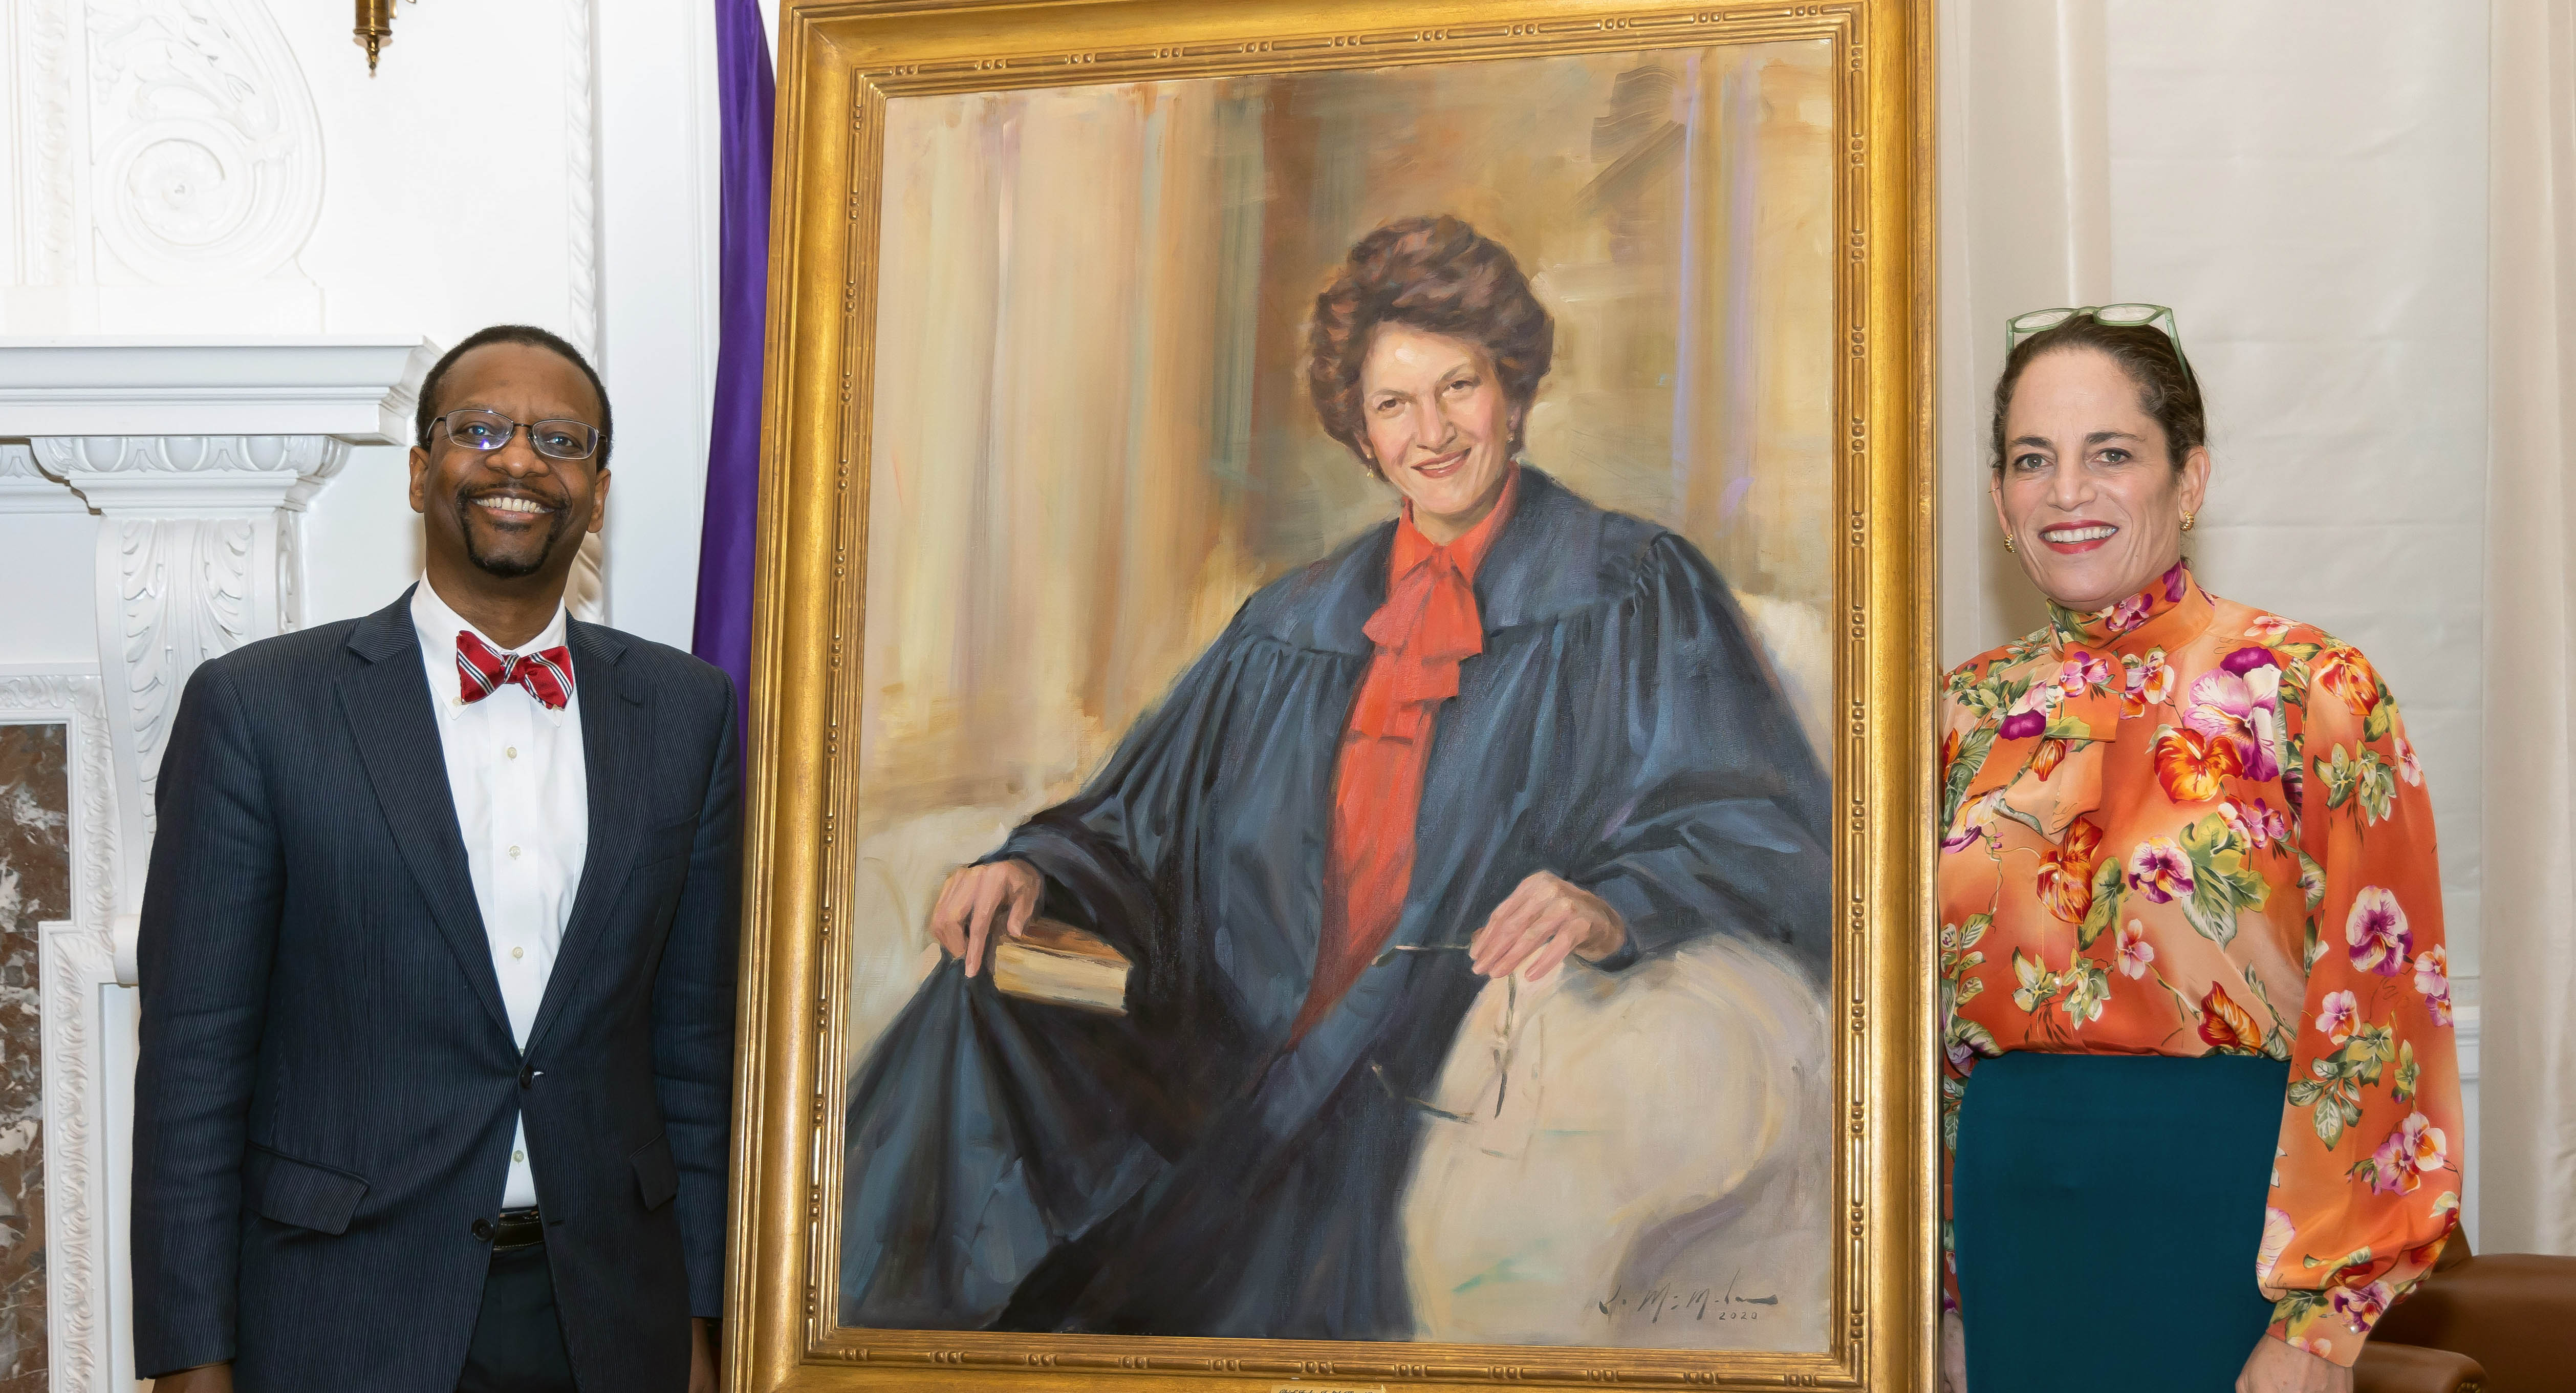 Troy McKenzie '00 and Luisa Hagemeier ’91 with the portrait of Judith Kaye '62